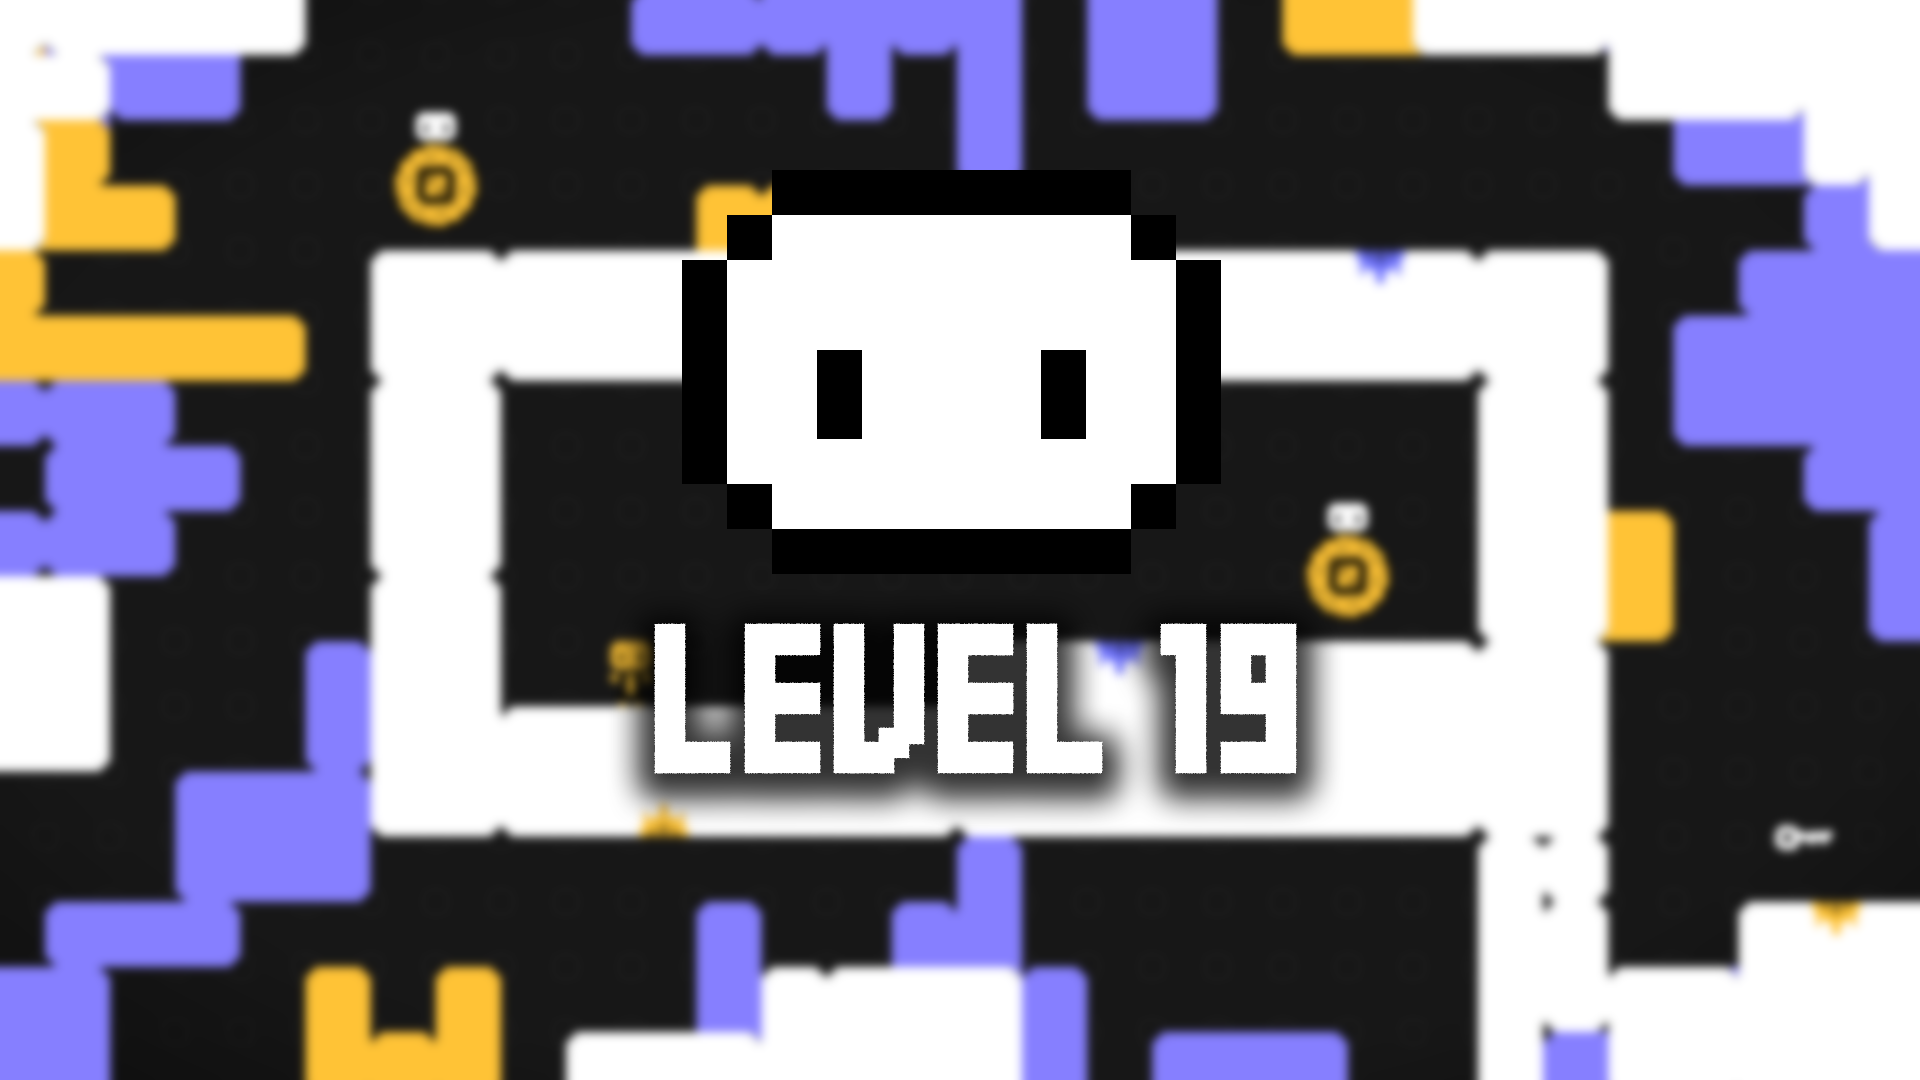 Level 19